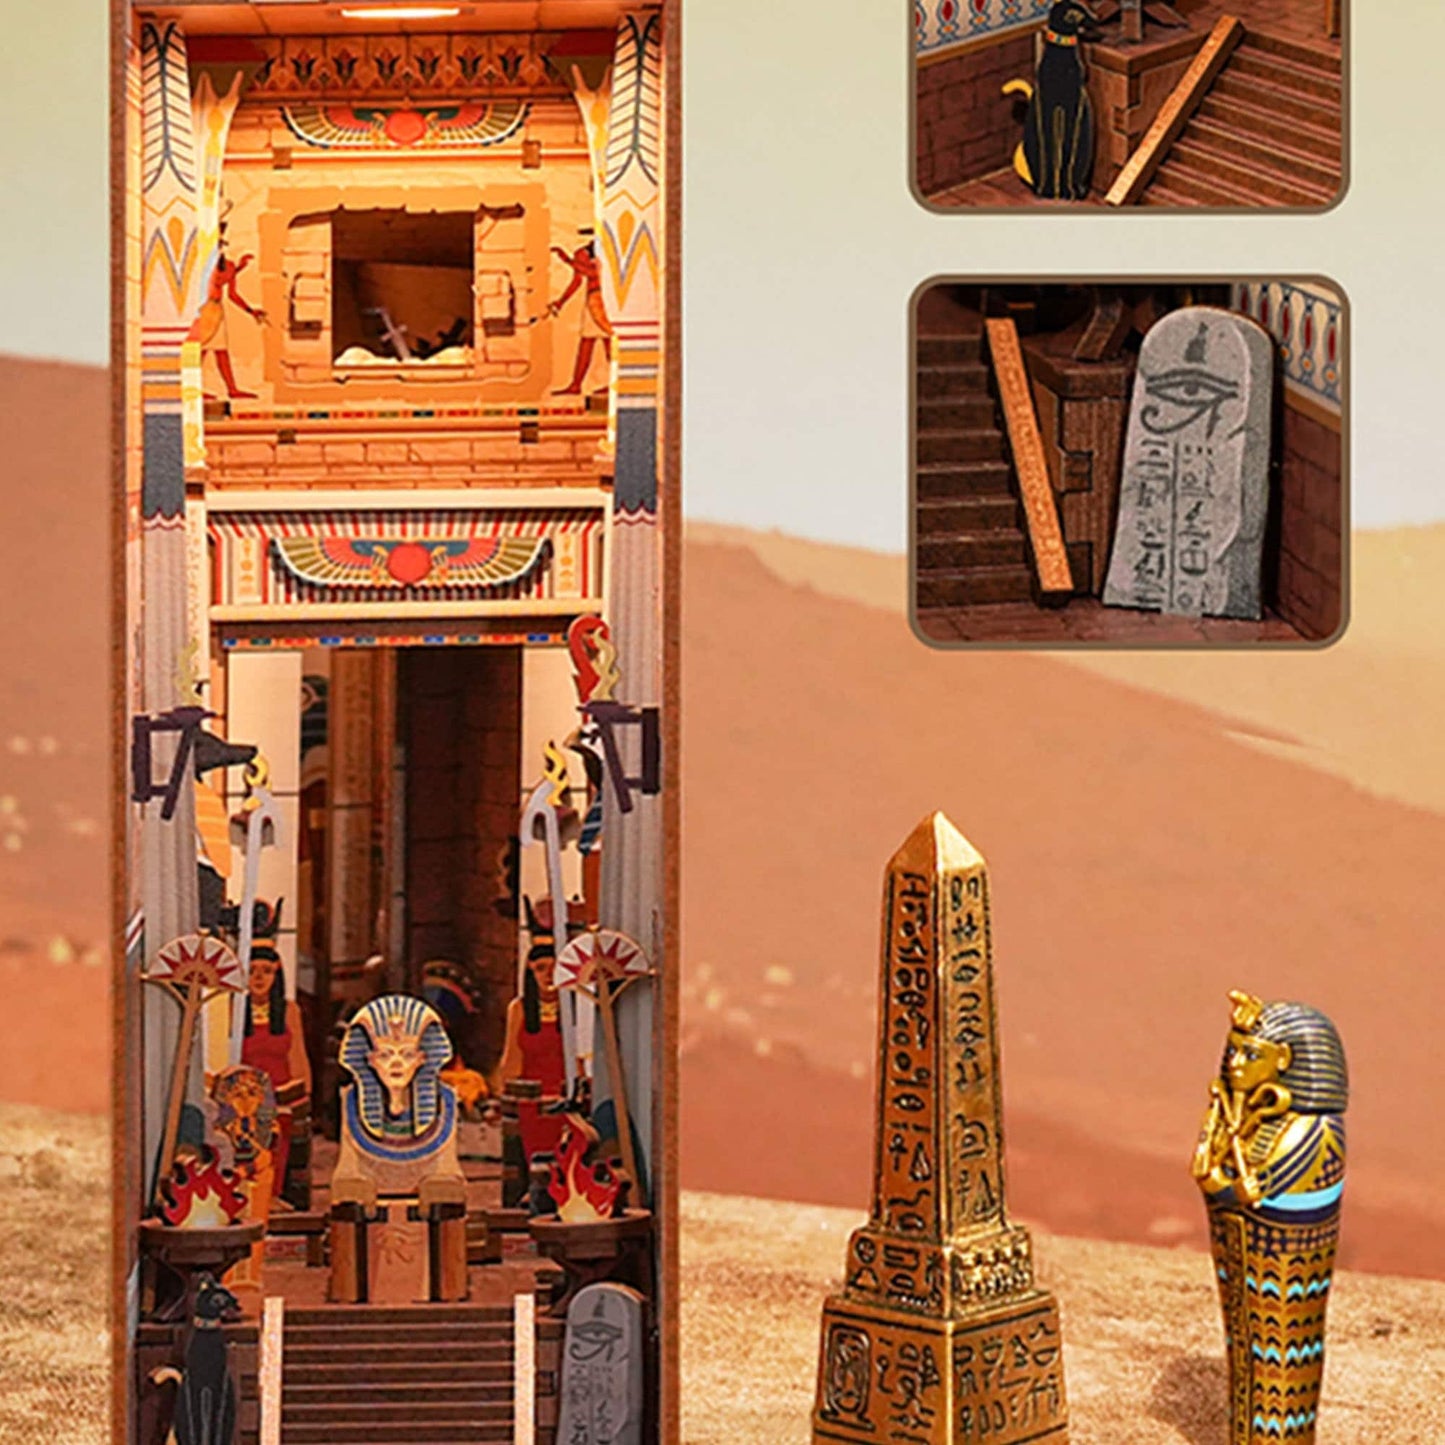 Egypt treasure hunt DIY bookstore set